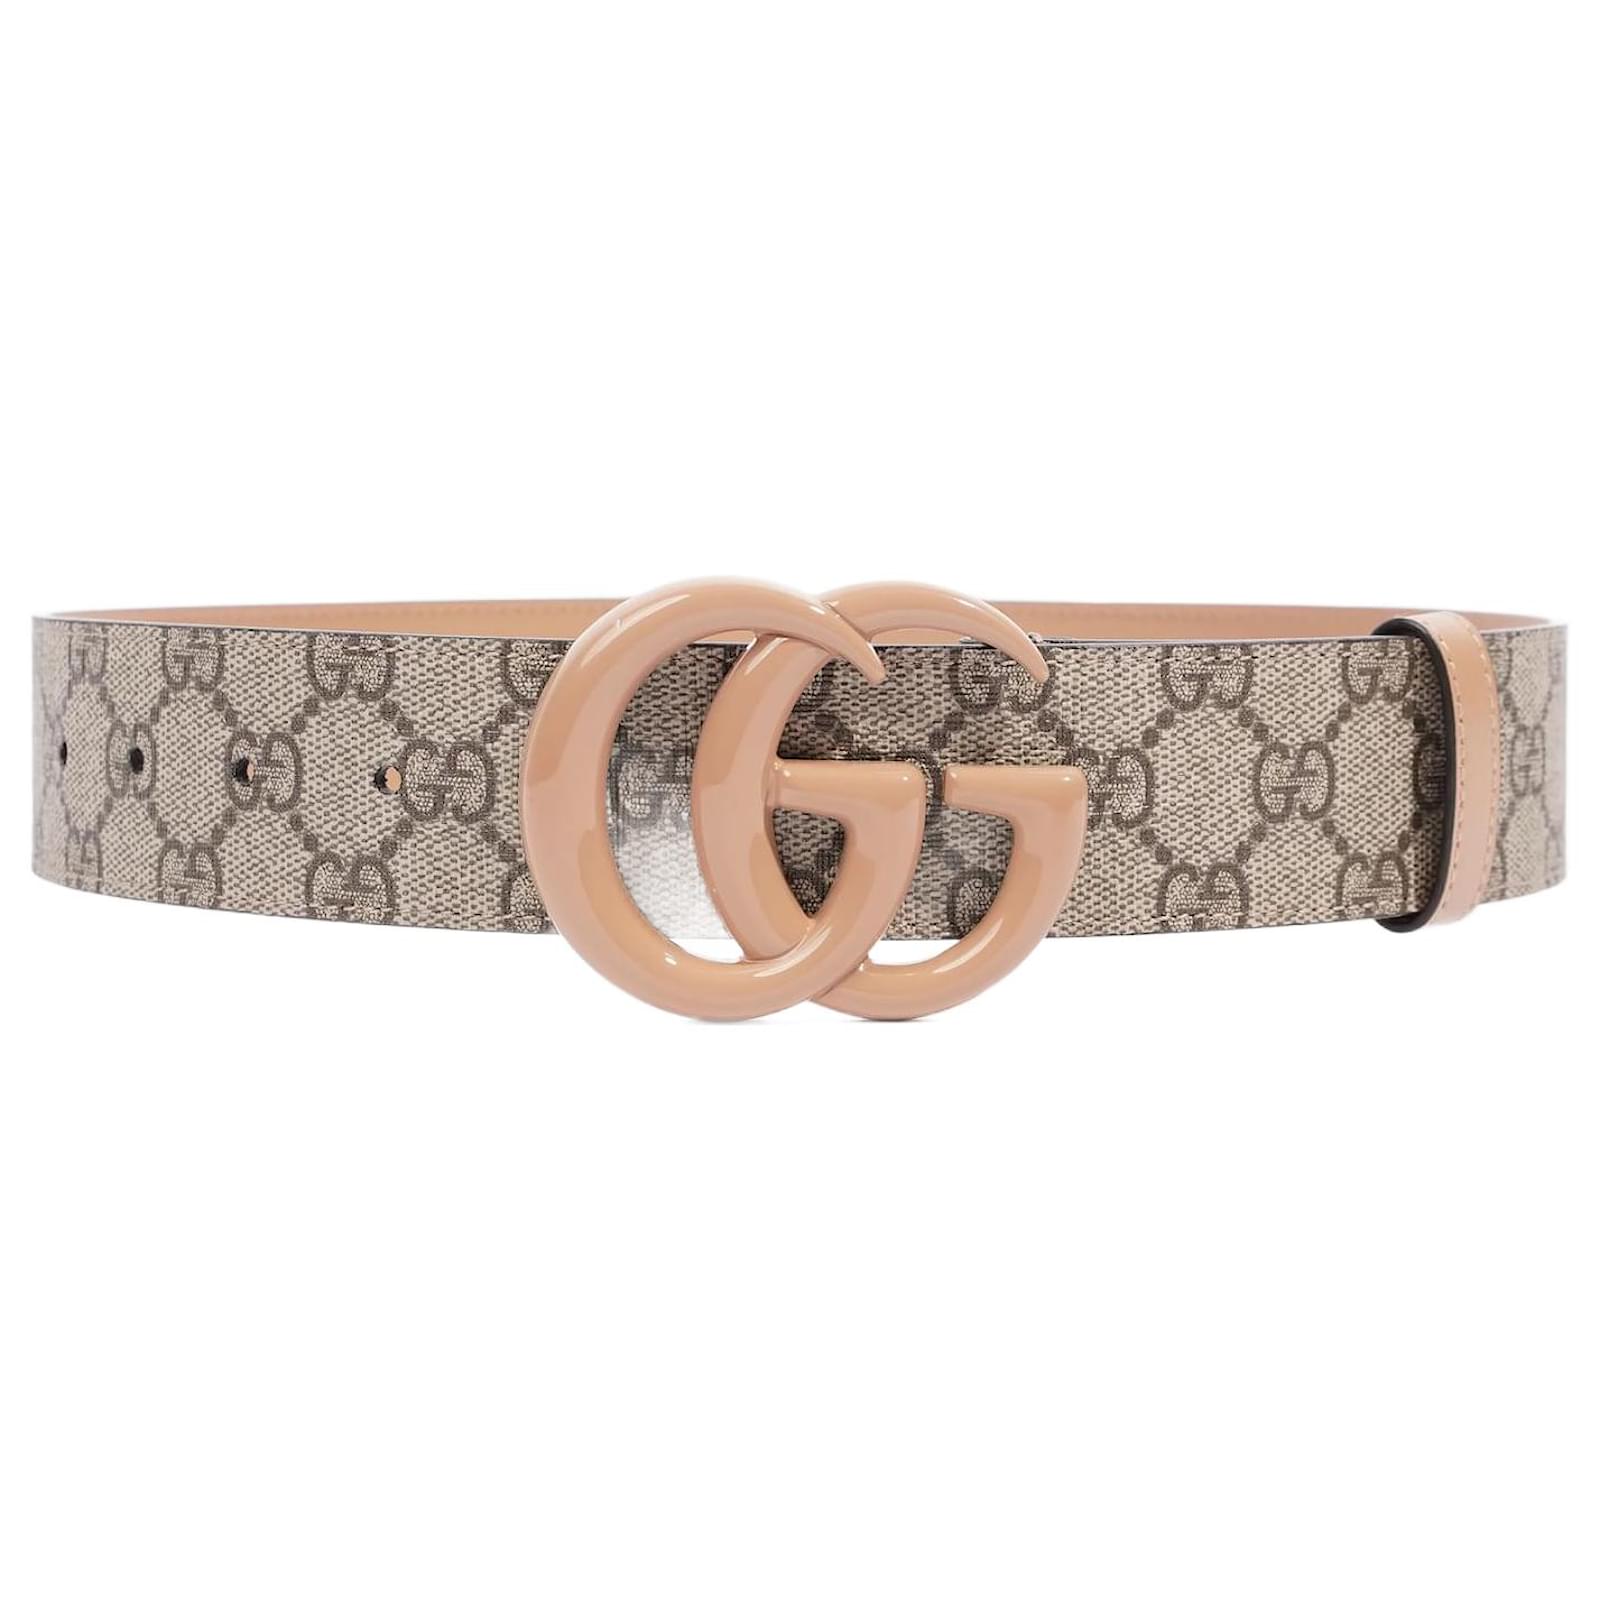 Gucci Dark Brown Leather GG Marmont Buckle Belt 90 CM Gucci